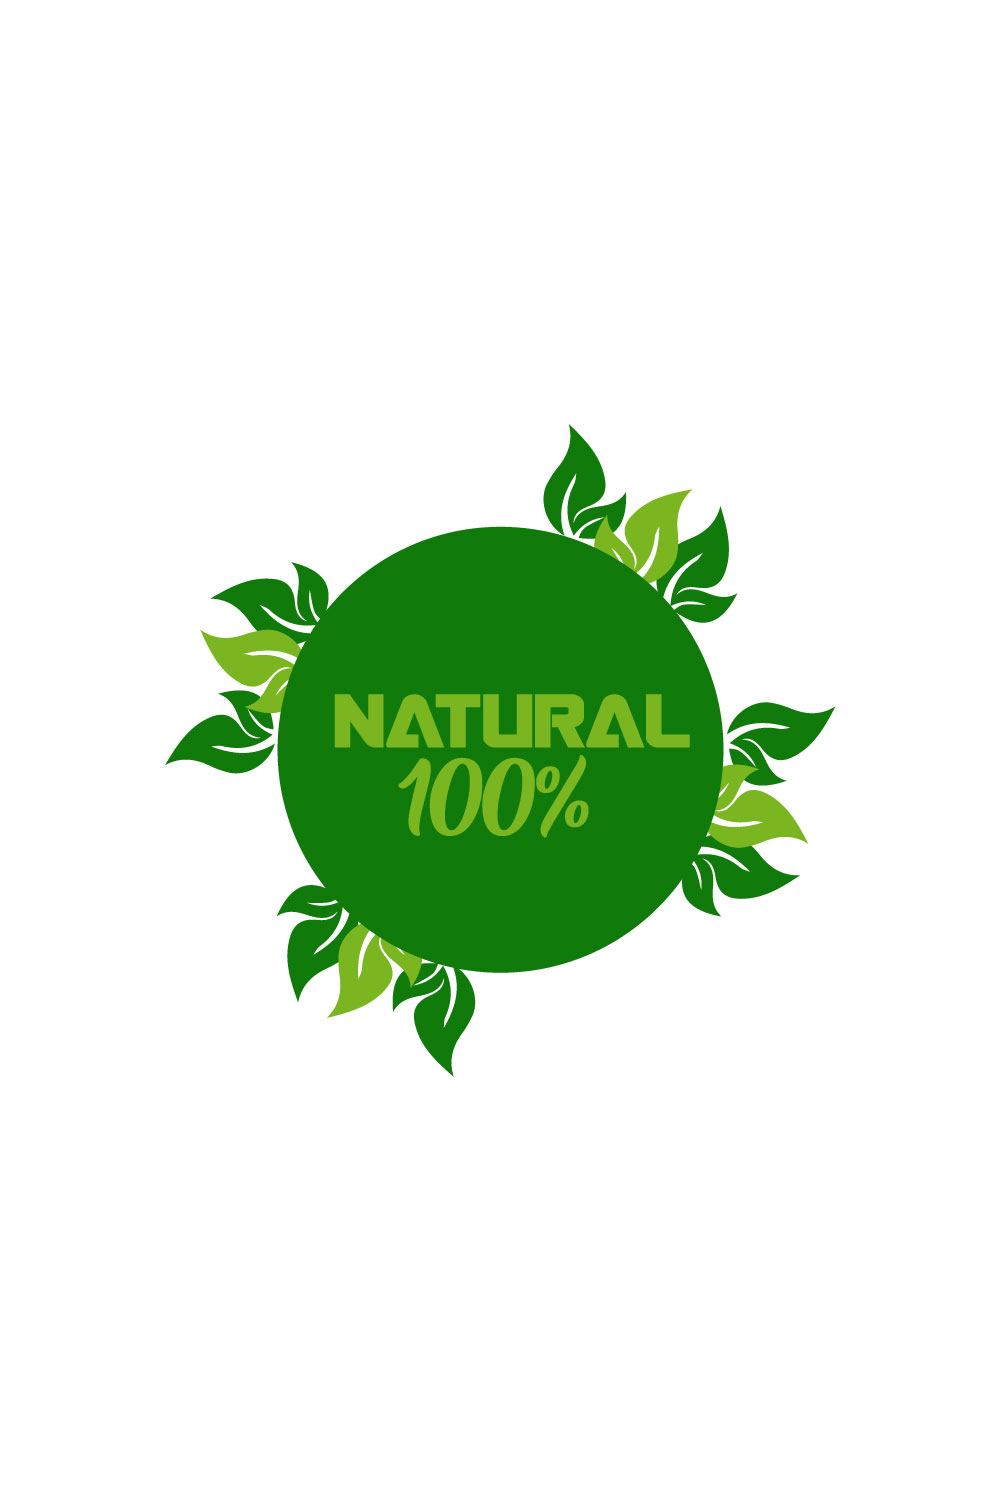 Free herbal logo pinterest preview image.